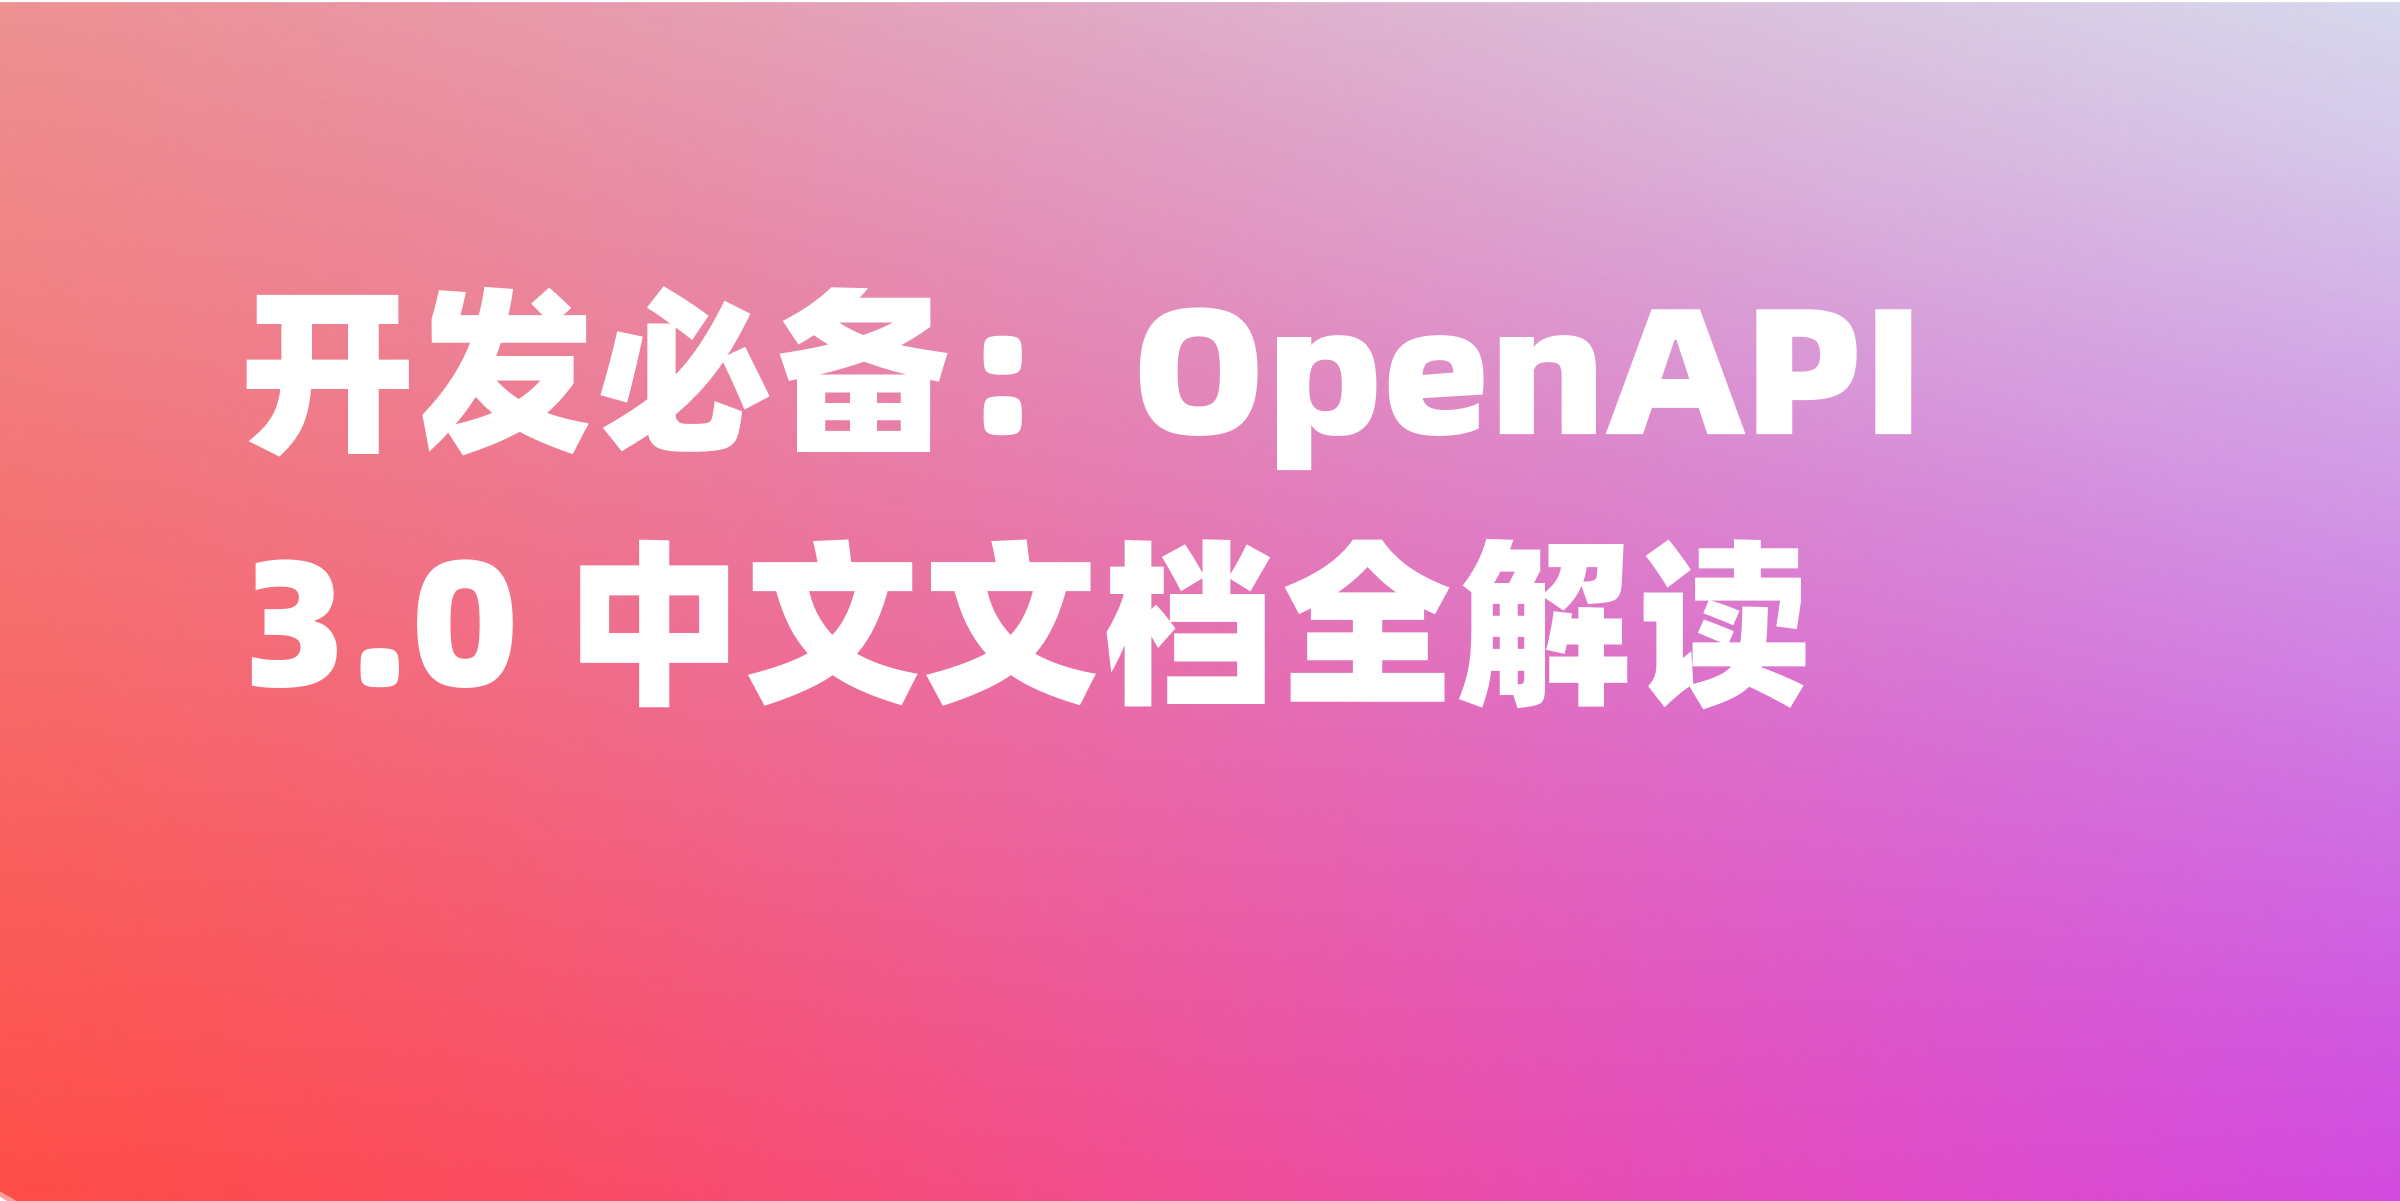 OpenAPI 3.0 中文文档